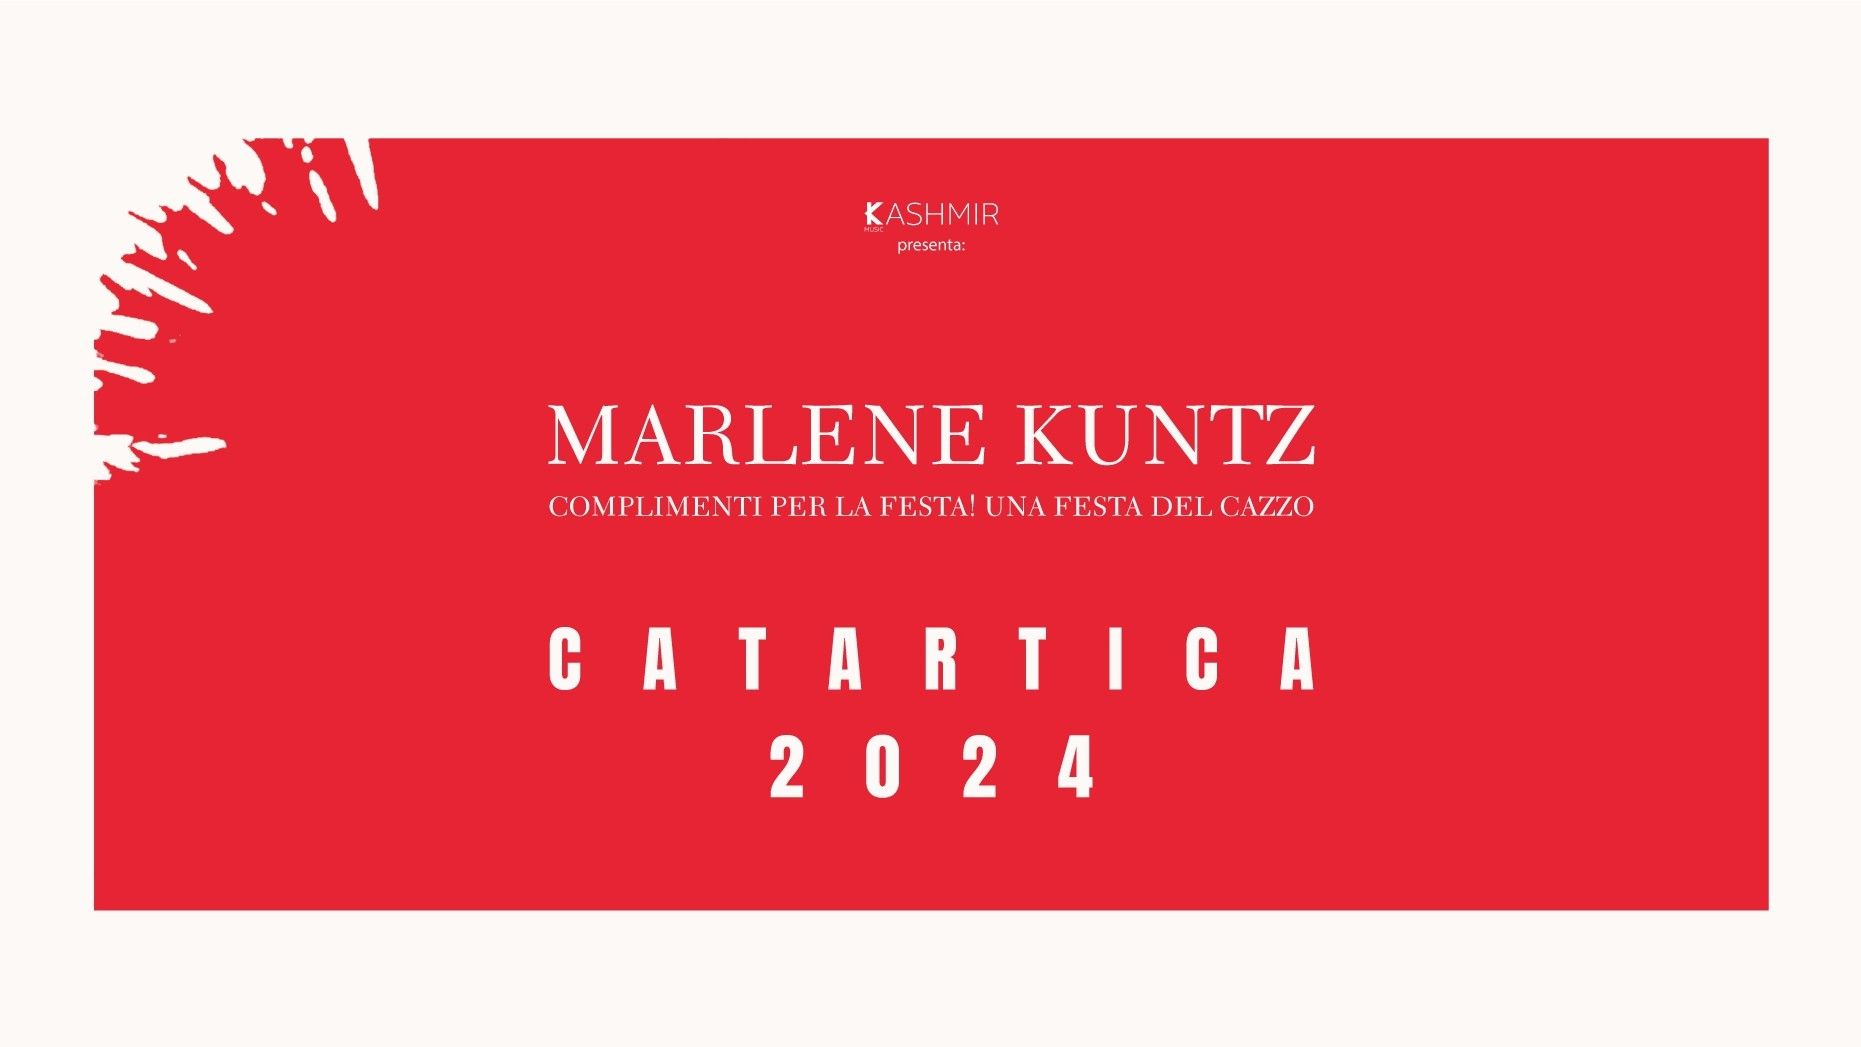 Catartica Tour 2024